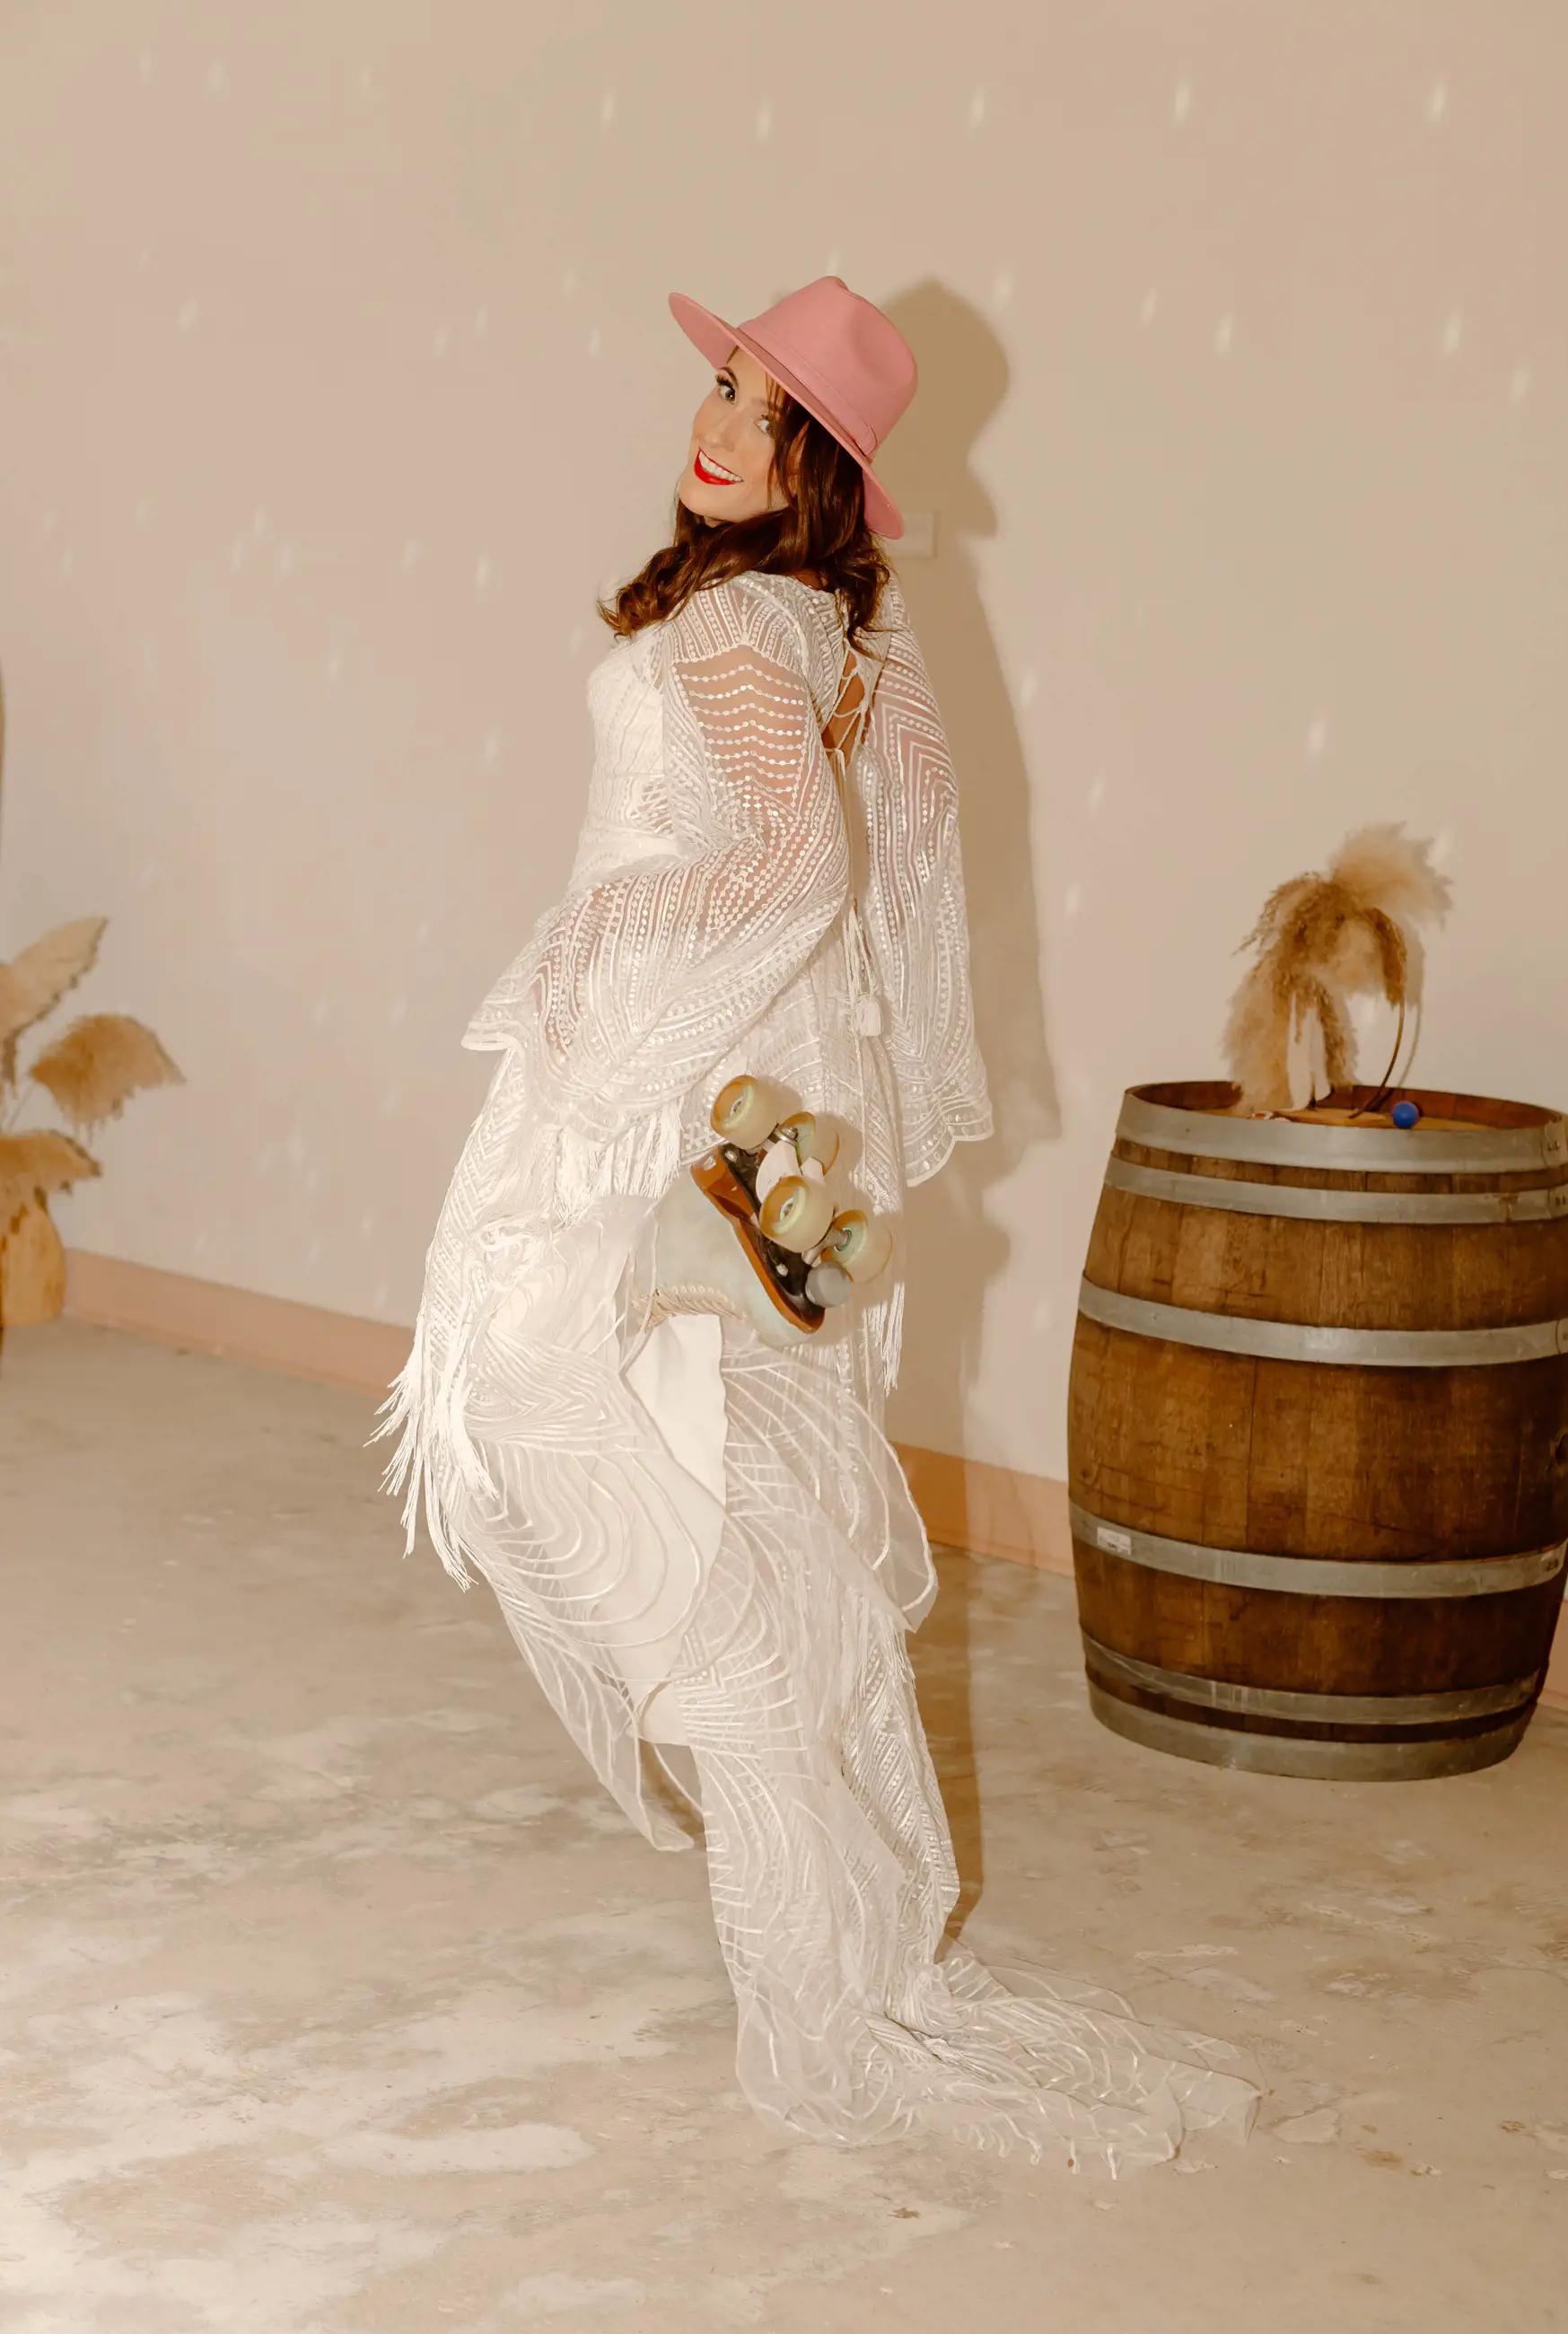 Retro Bride With Roller Skates | The Groves Creative Haus